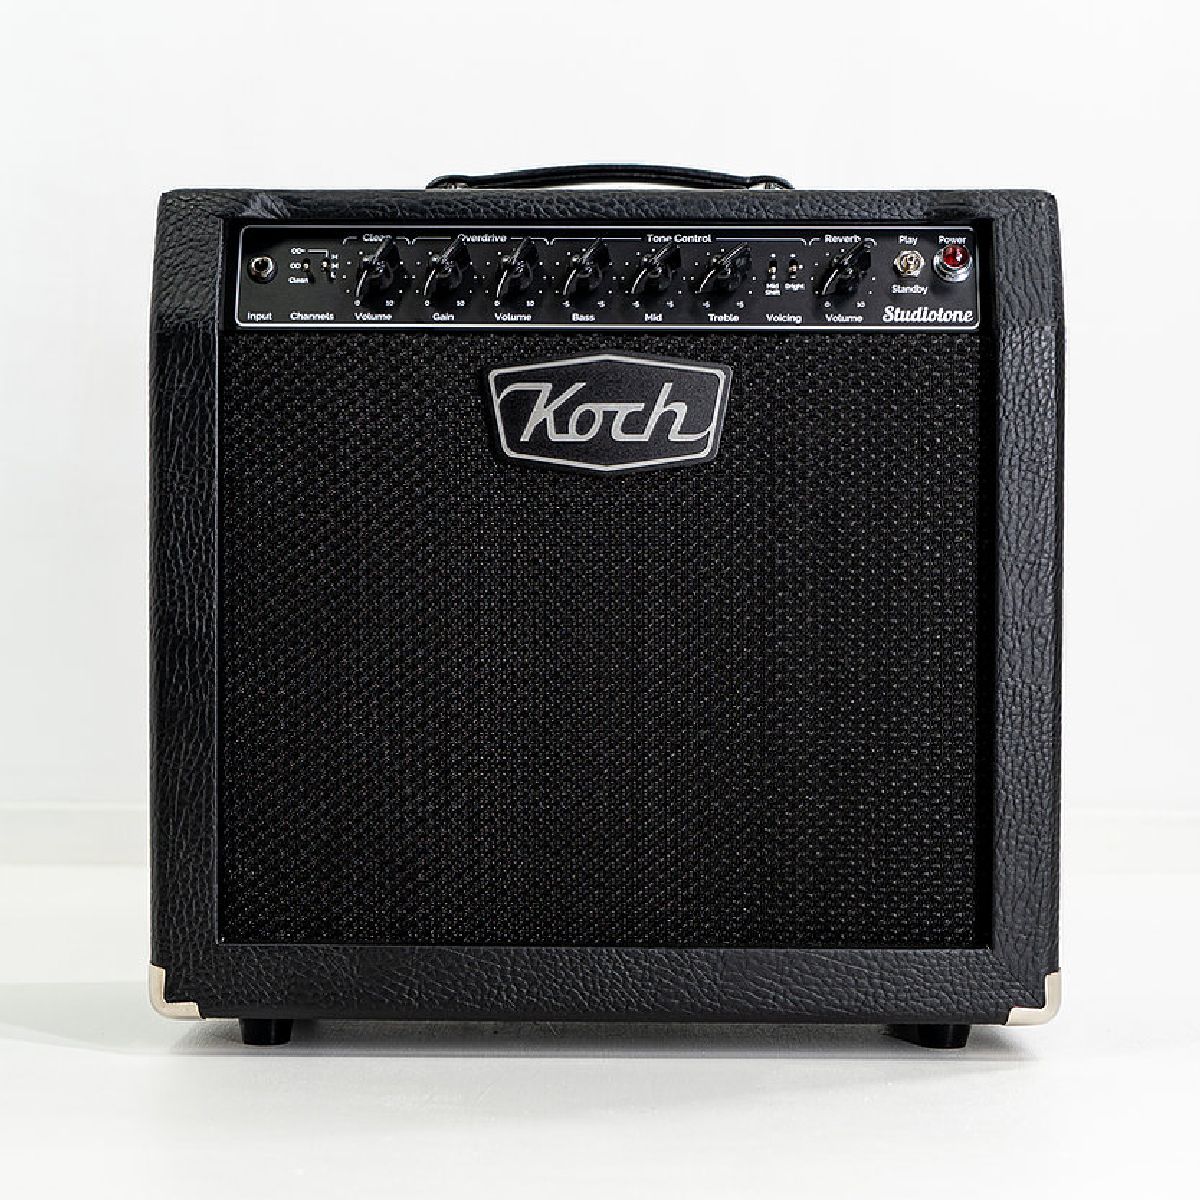 Koch Studiotone Combo ampli guitare - Le Guitariste Boutique